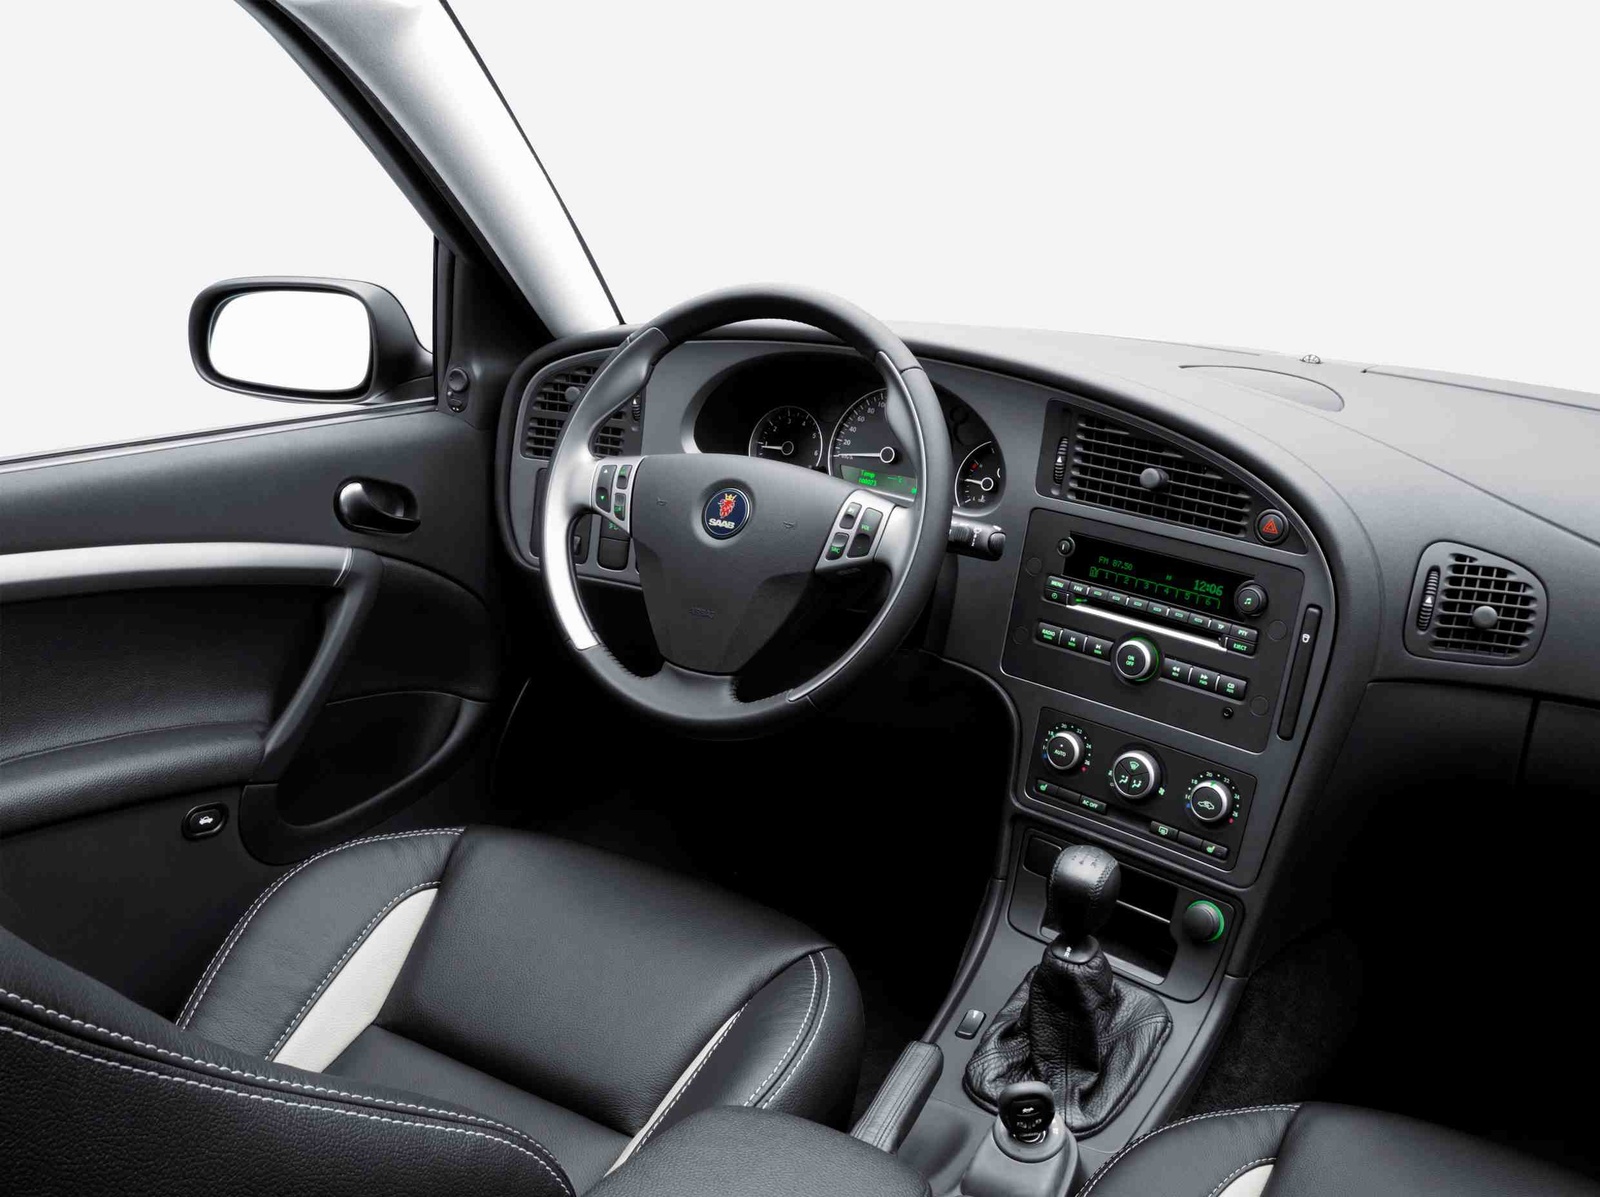 2009 Saab 9-5 SportCombi - Pictures - Interior Front View - CarGurus